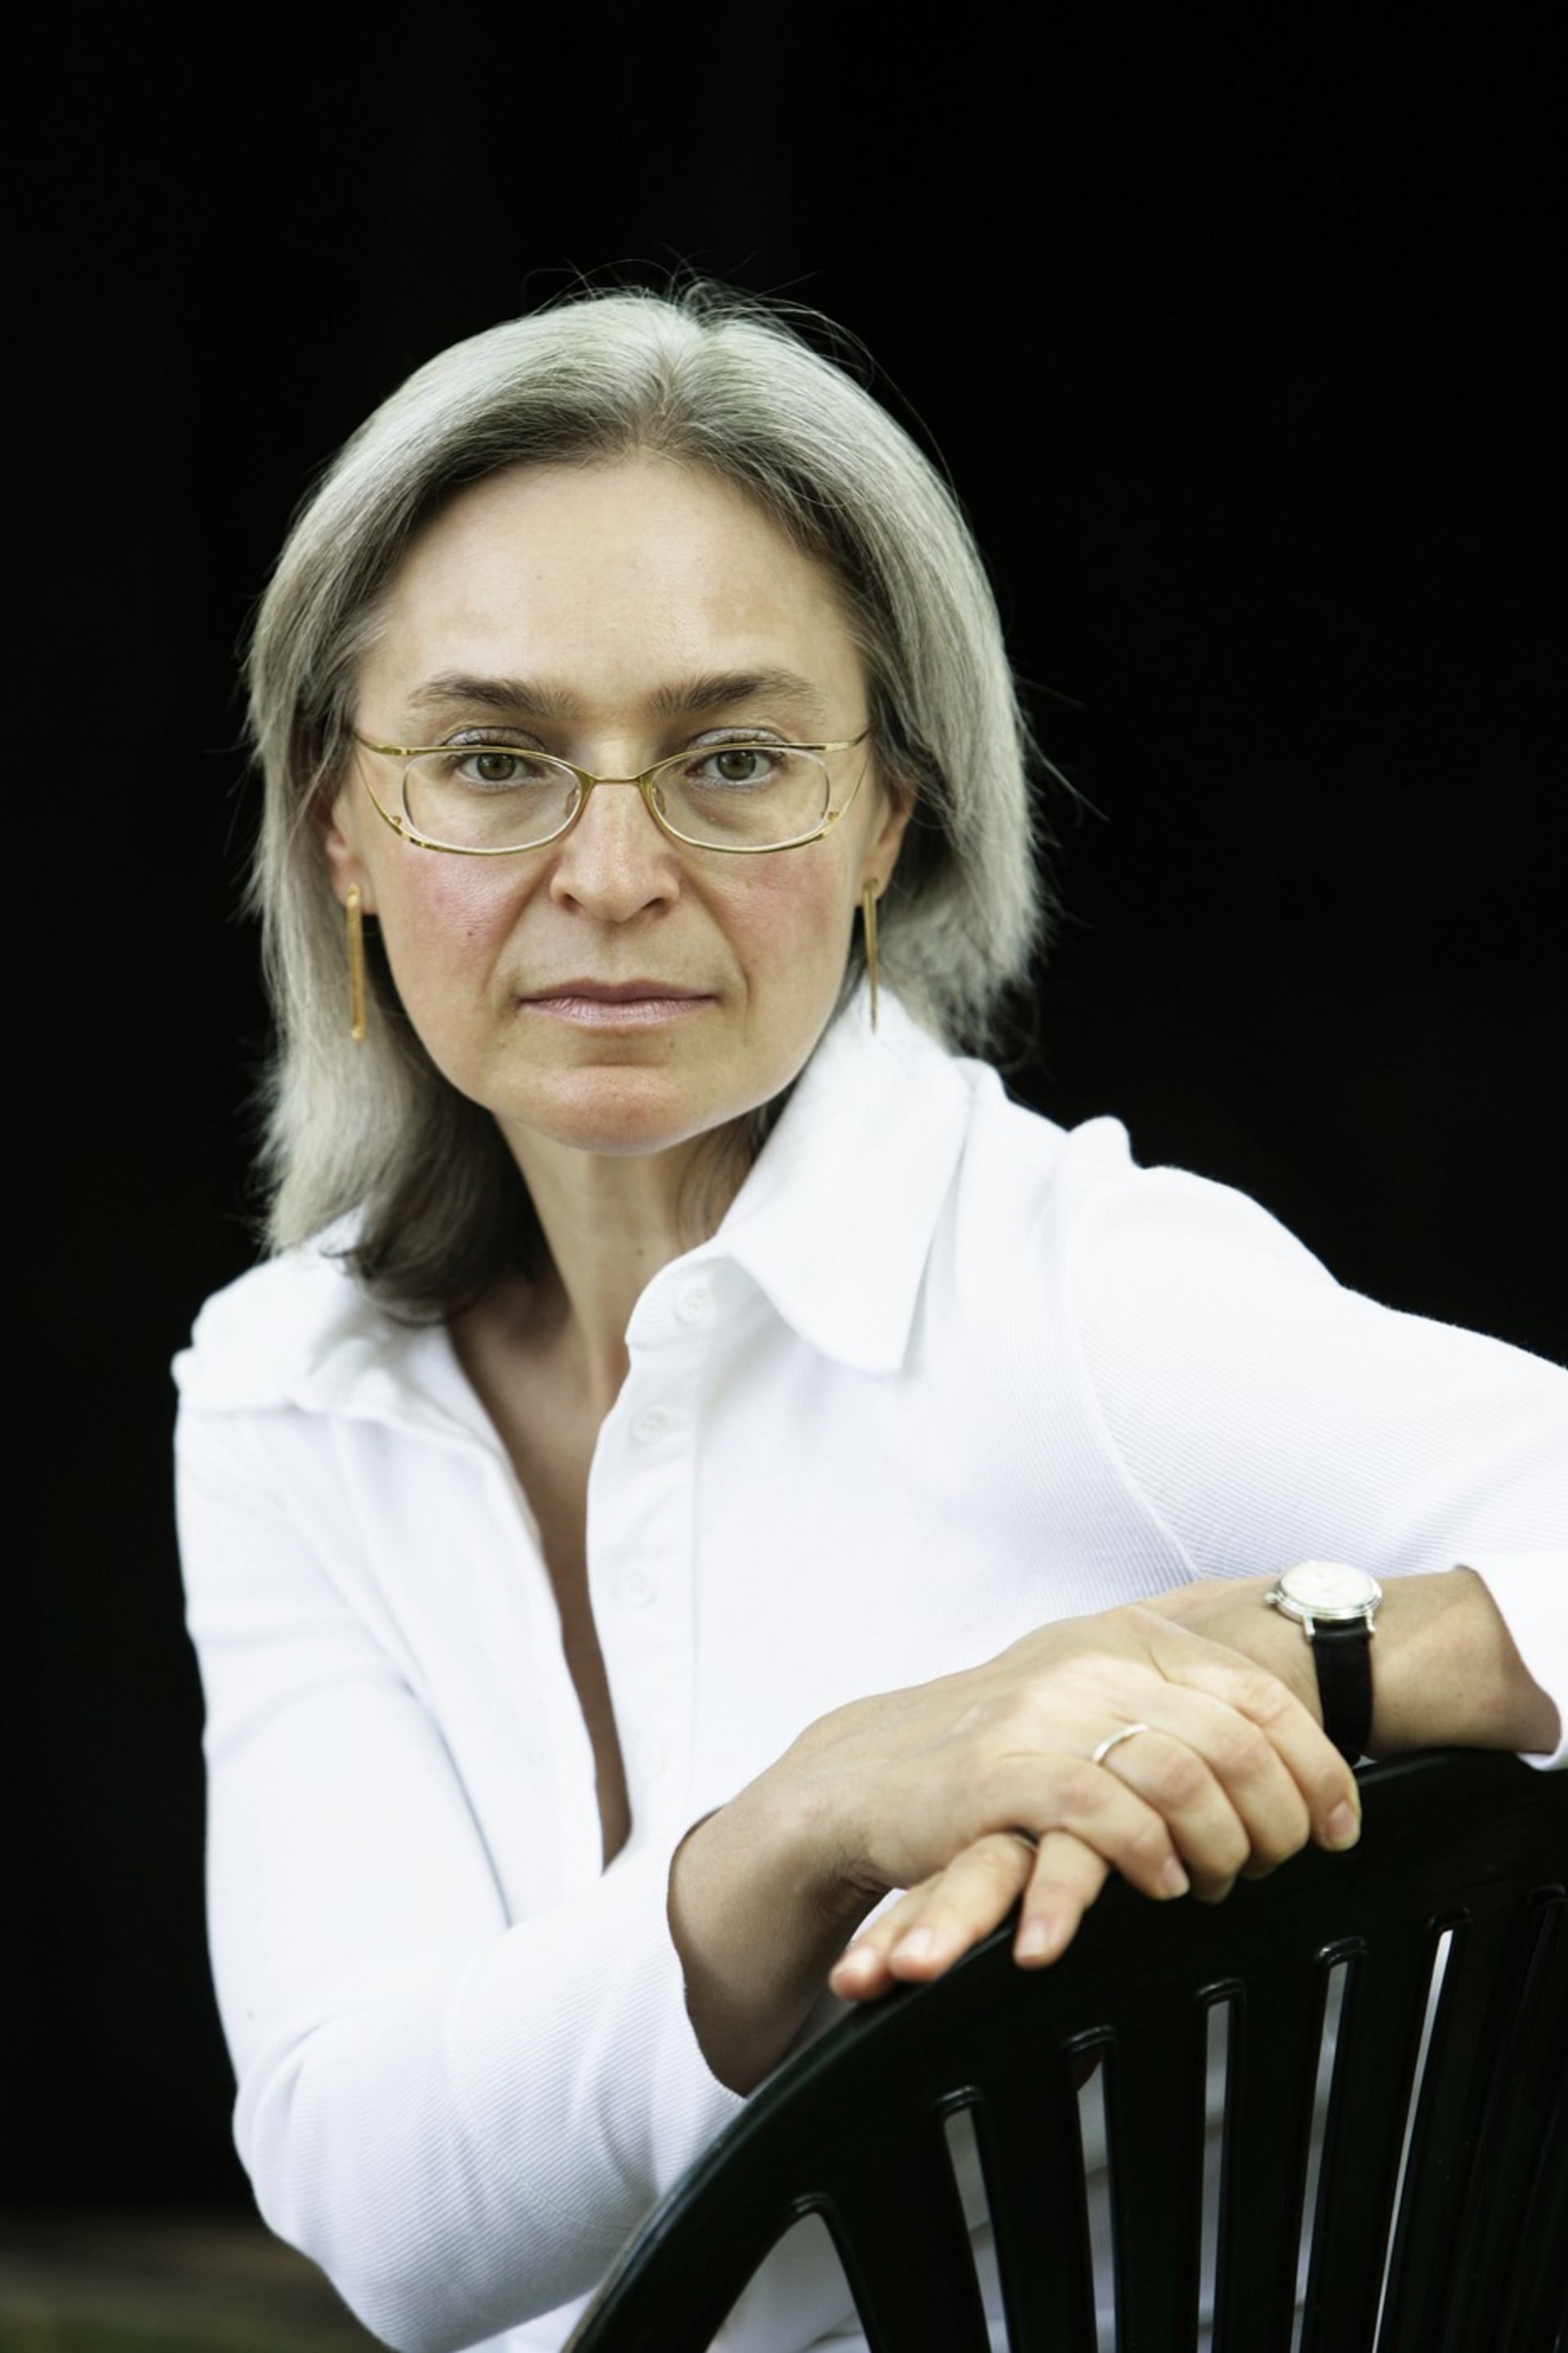 Novinářka Anna Politkovská